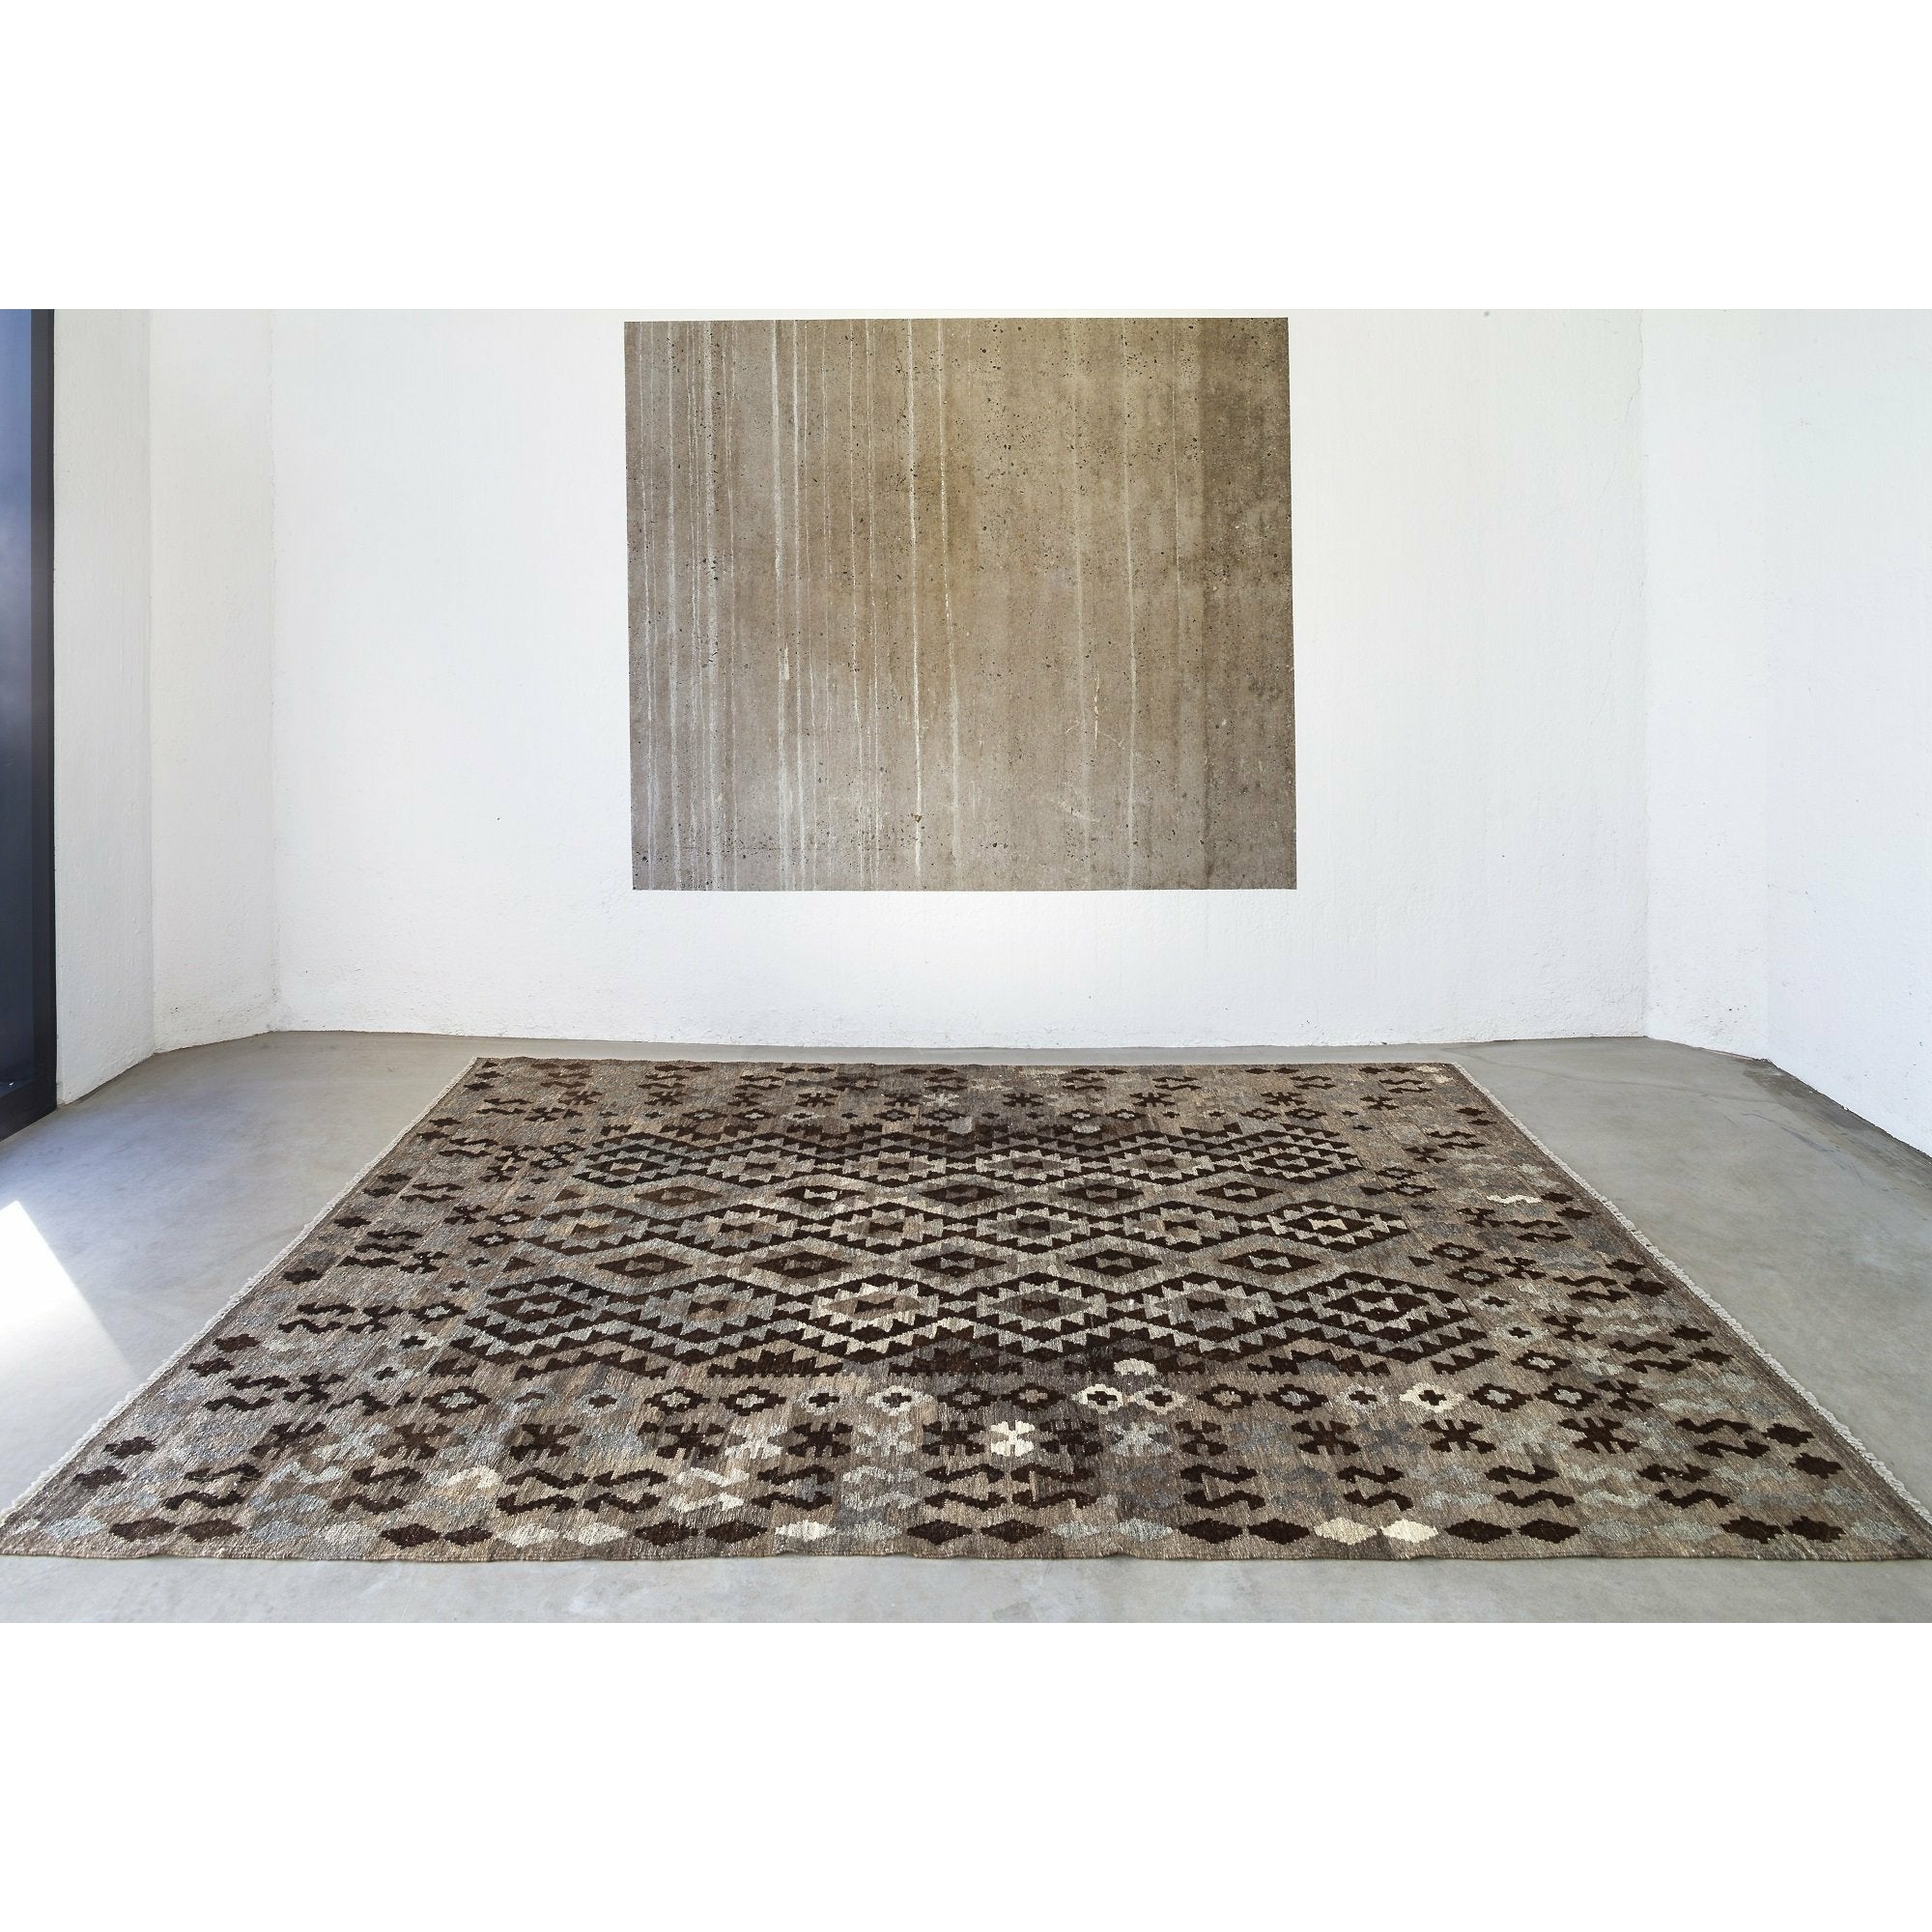 Massimo Kelim matta naturlig mörkgrå/brun/svart, 200x300 cm